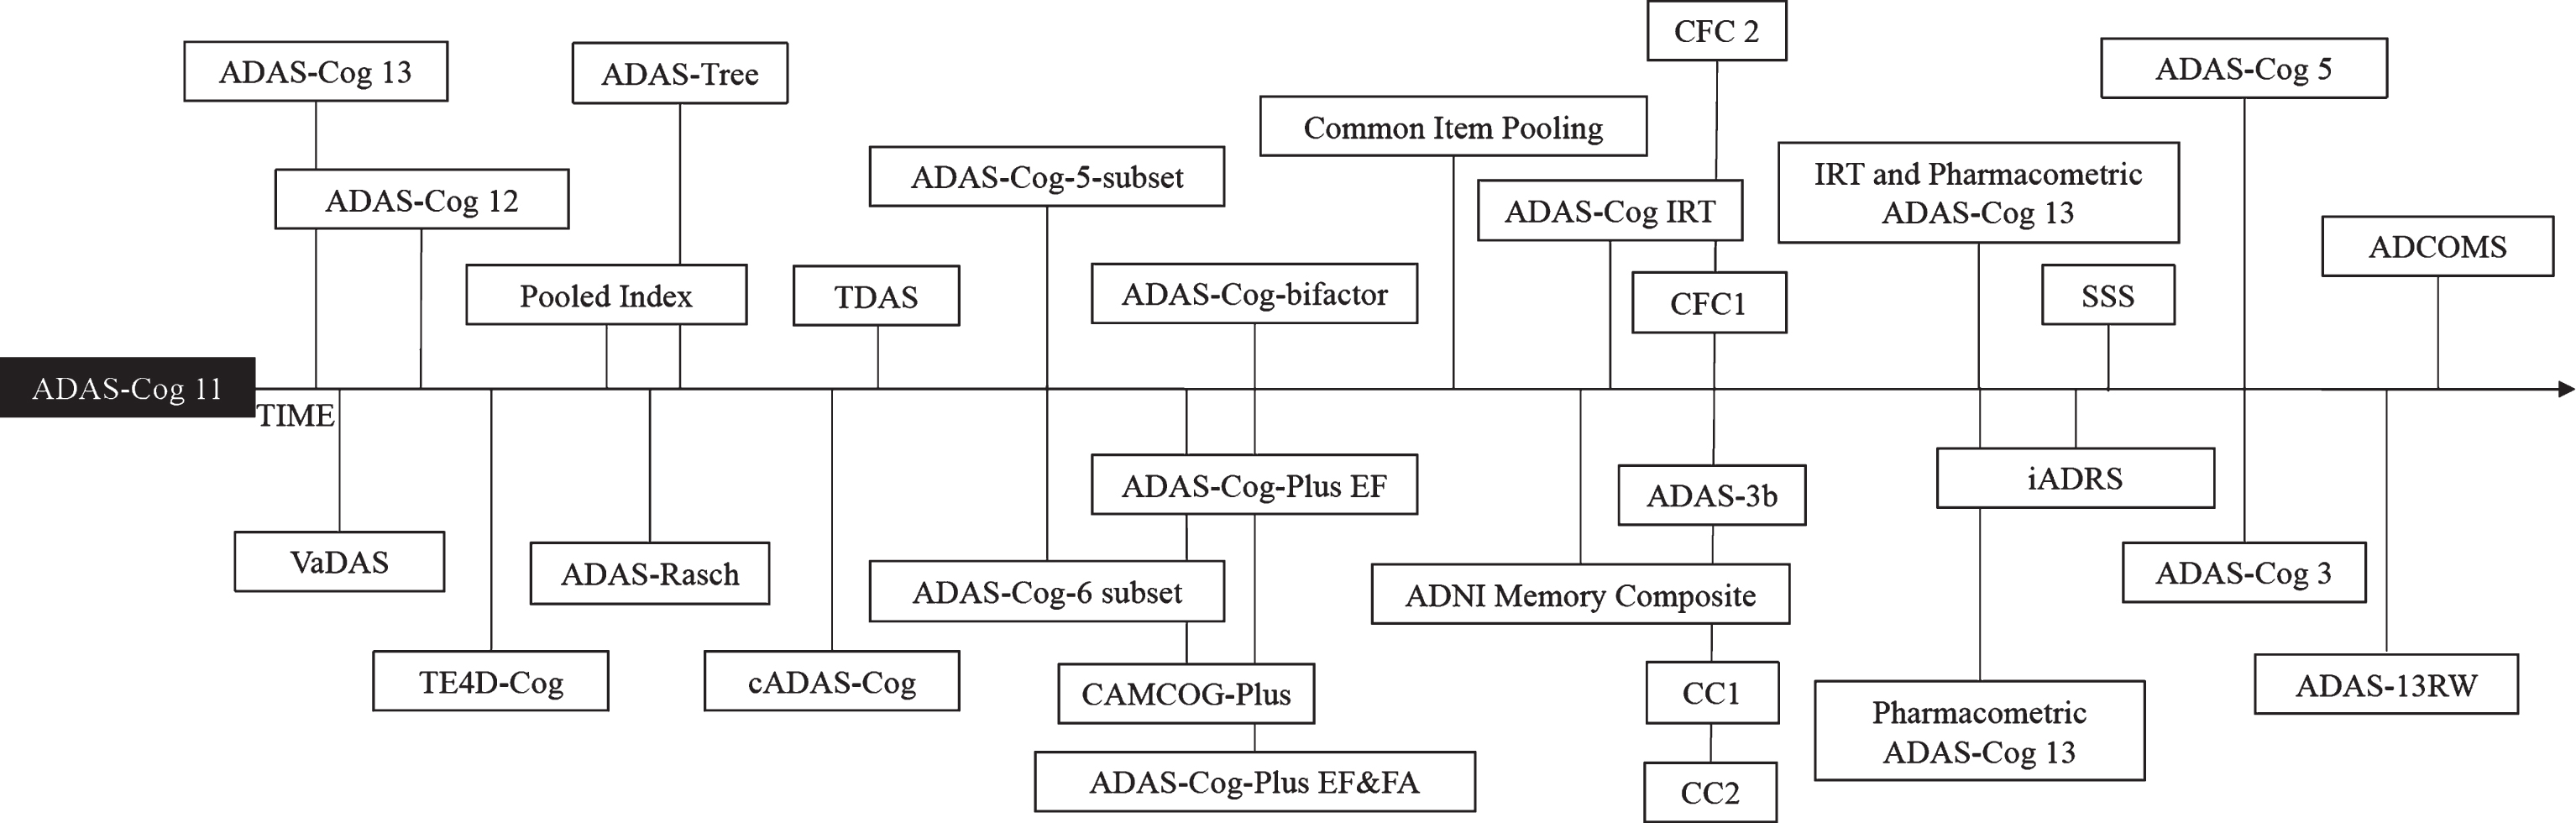 Timeline of ADAS-Cog 11 modifications.